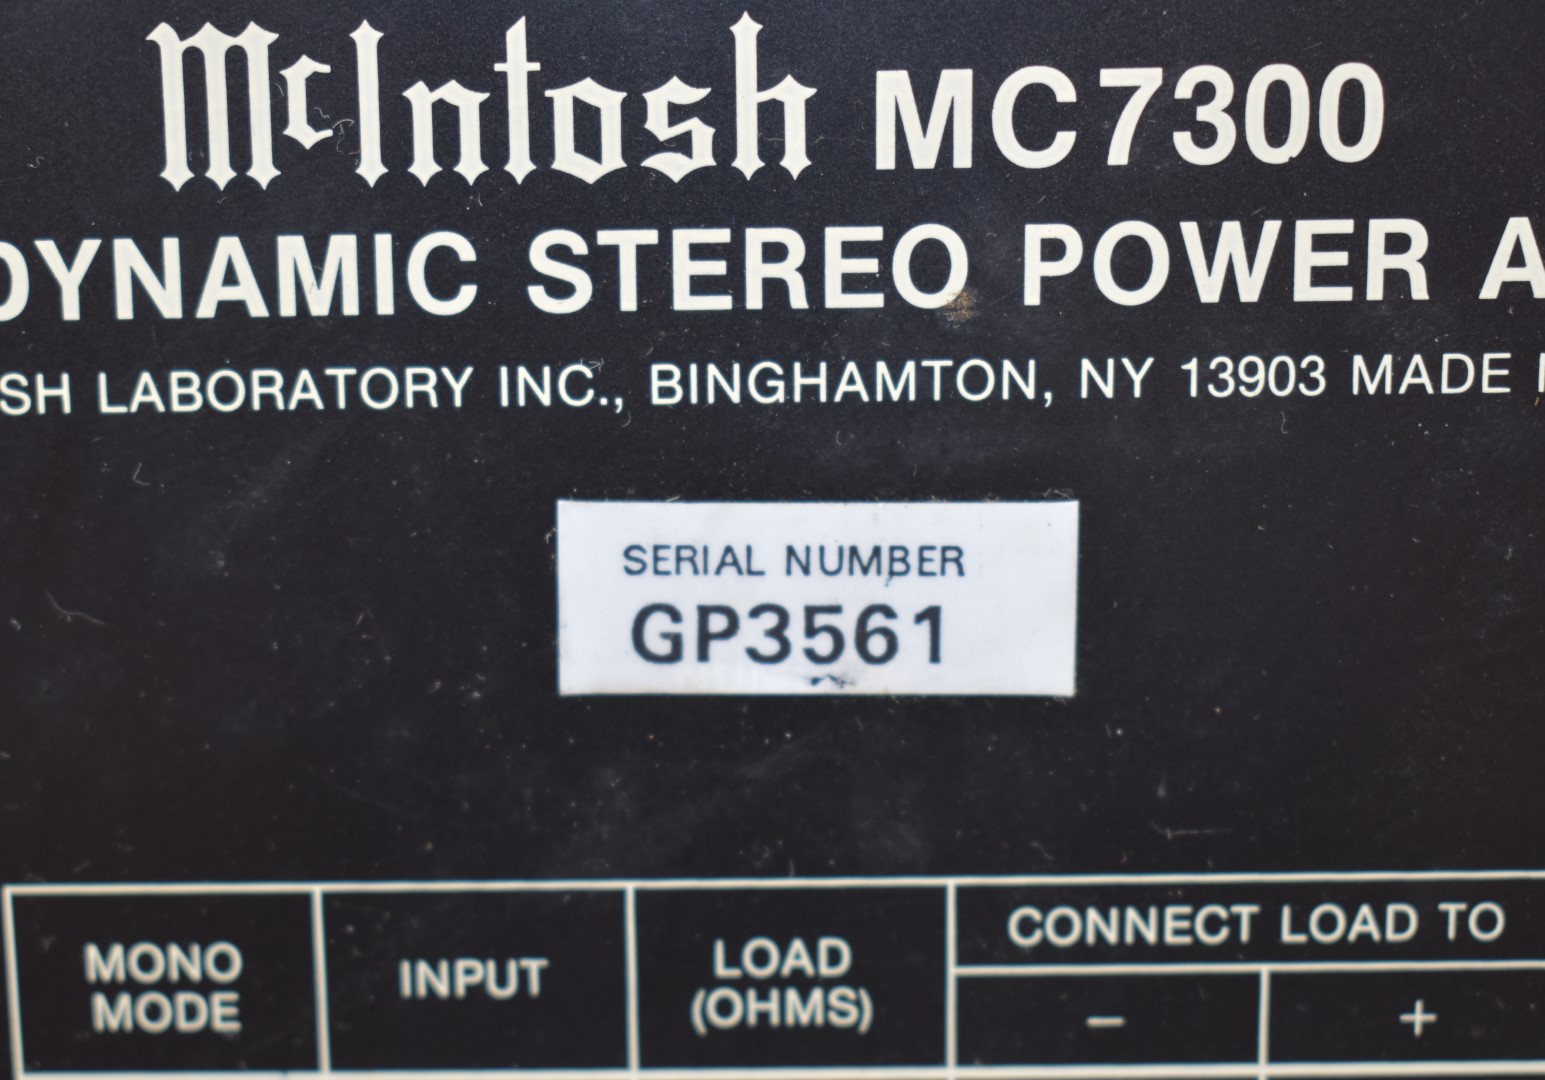 McIntosh MC7300 digital dynamic stereo power amplifier, serial number GP3561. - Image 4 of 7